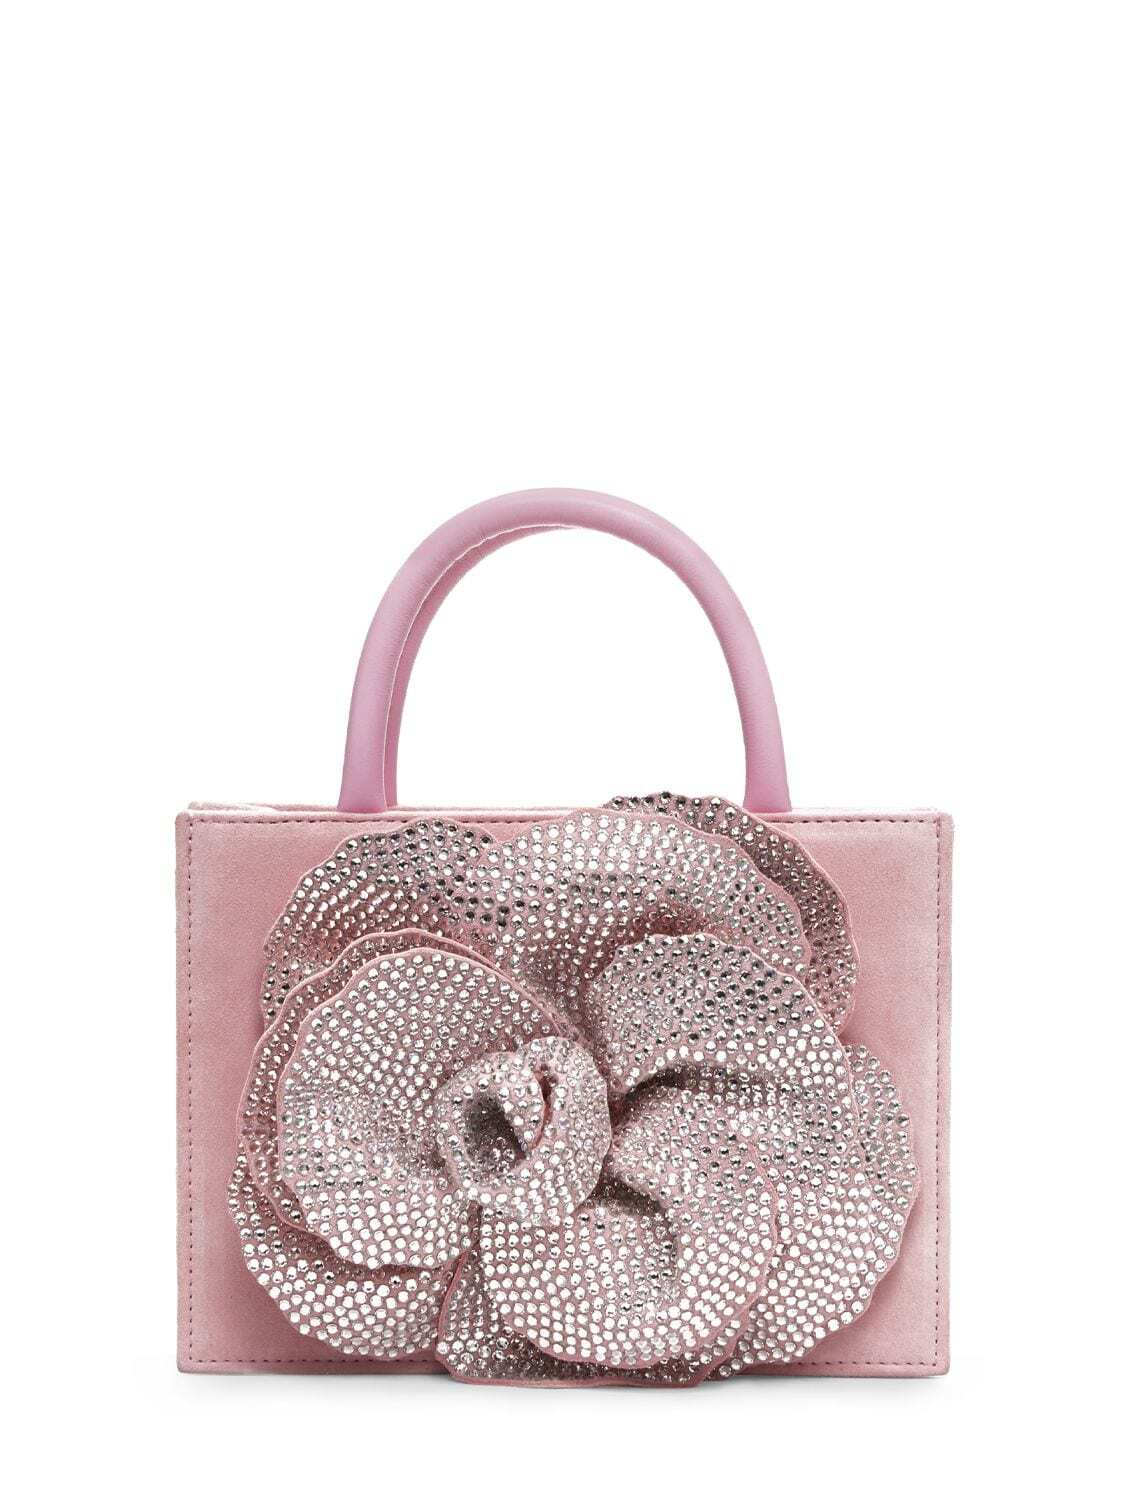 MACH & MACH Flower Satin & Crystal Top Handle Bag in pink